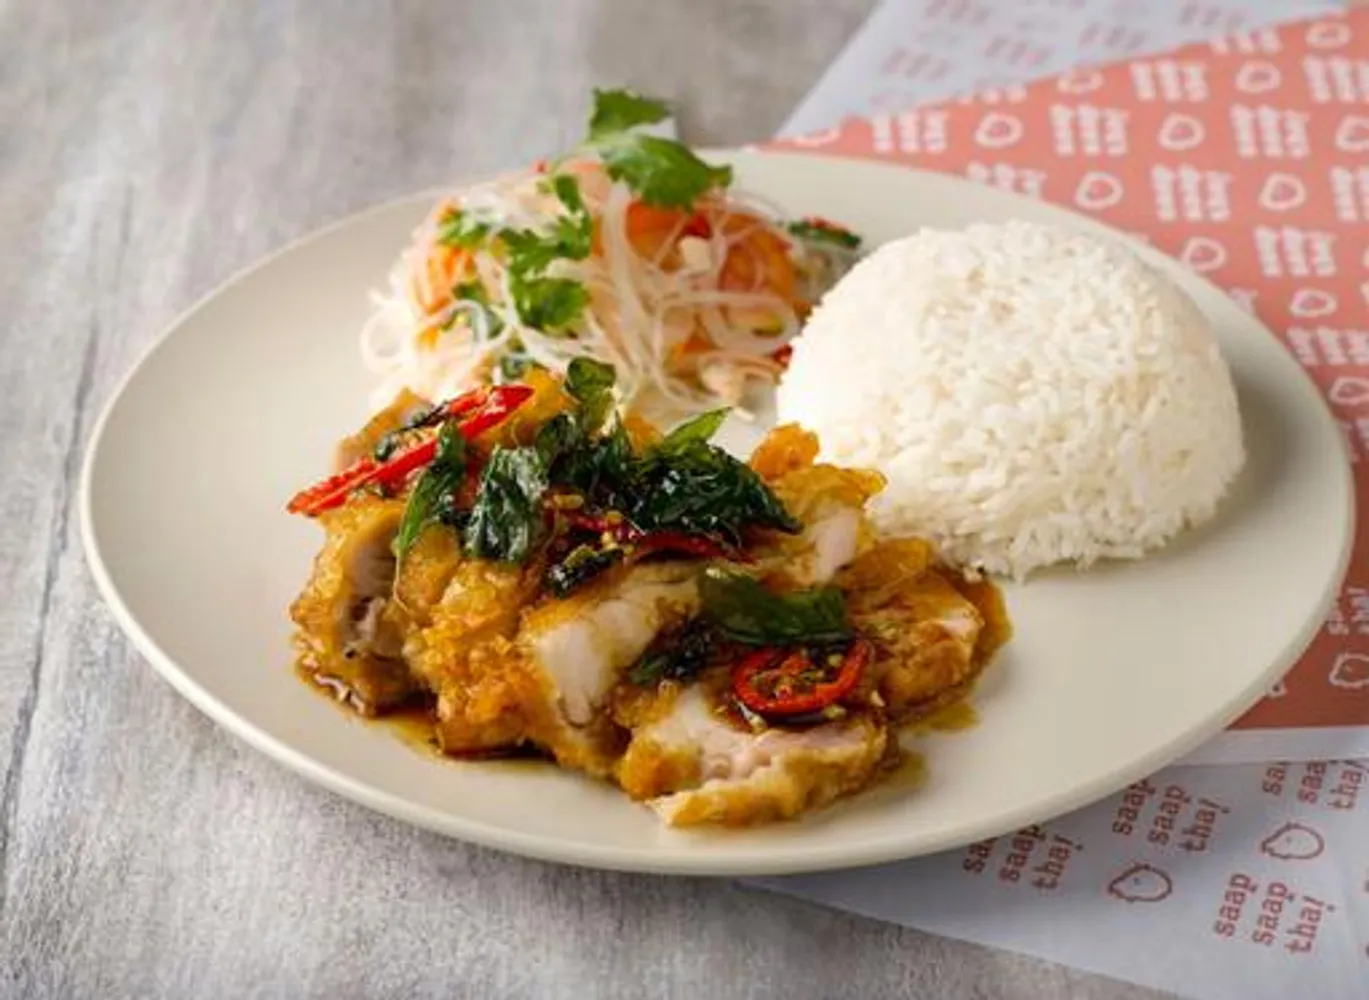 R4 Kra Pao Basil Crispy Chicken with Rice